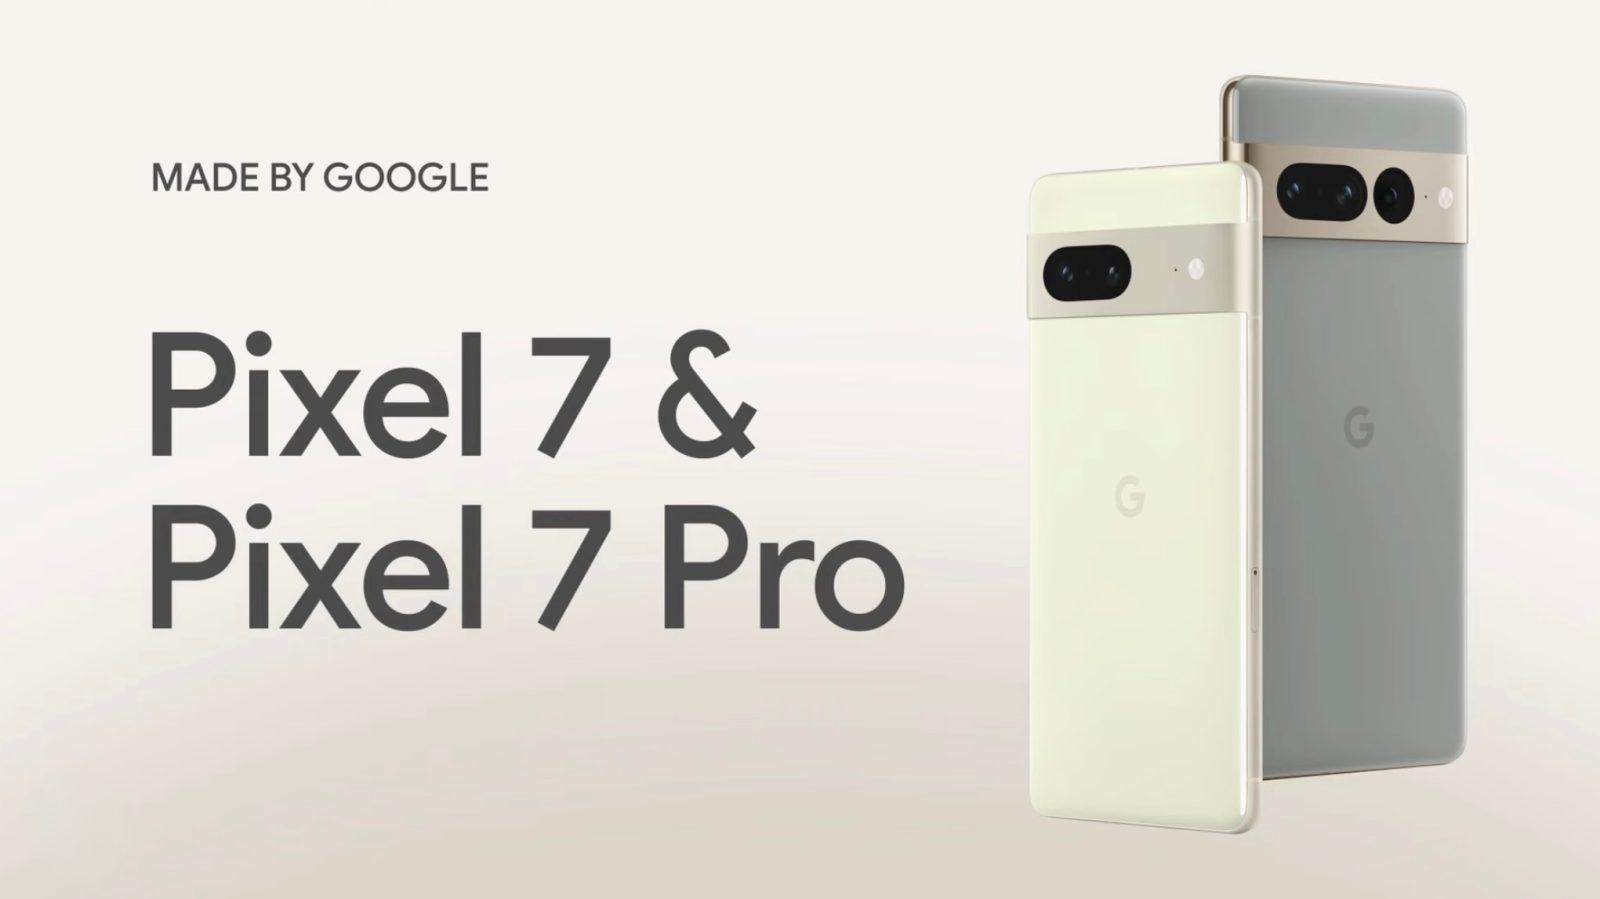 Google Pixel 7 iPhone 14 competitor